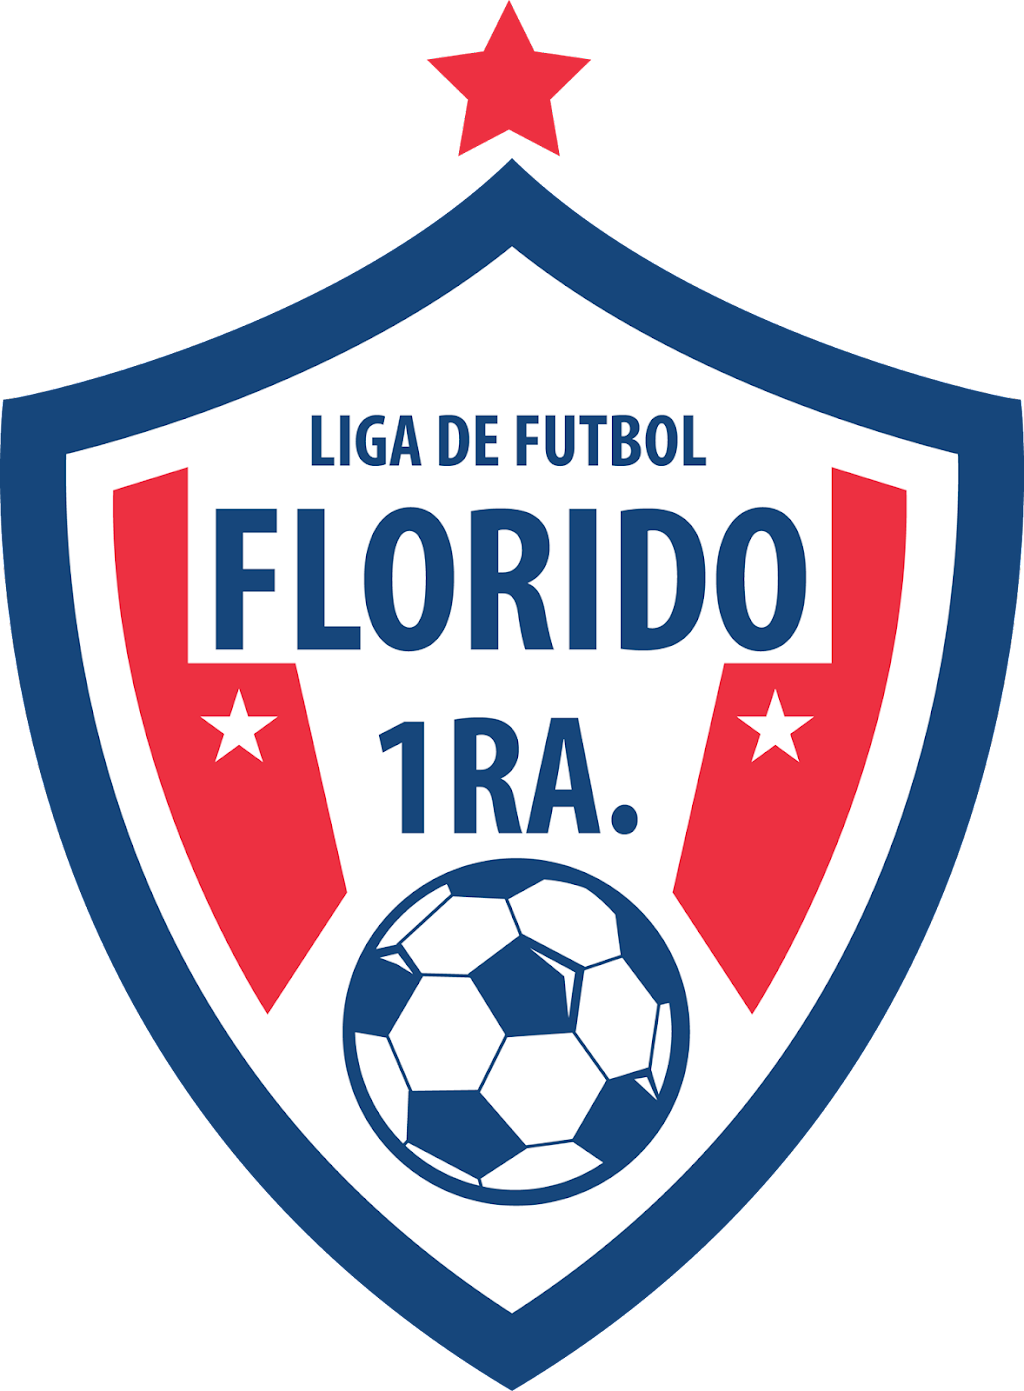 Liga De Futbol Florido 1ra | C. Principal 10002, El Florido 1ra y 2da Secc, 22237 Tijuana, B.C., Mexico | Phone: 664 283 4527